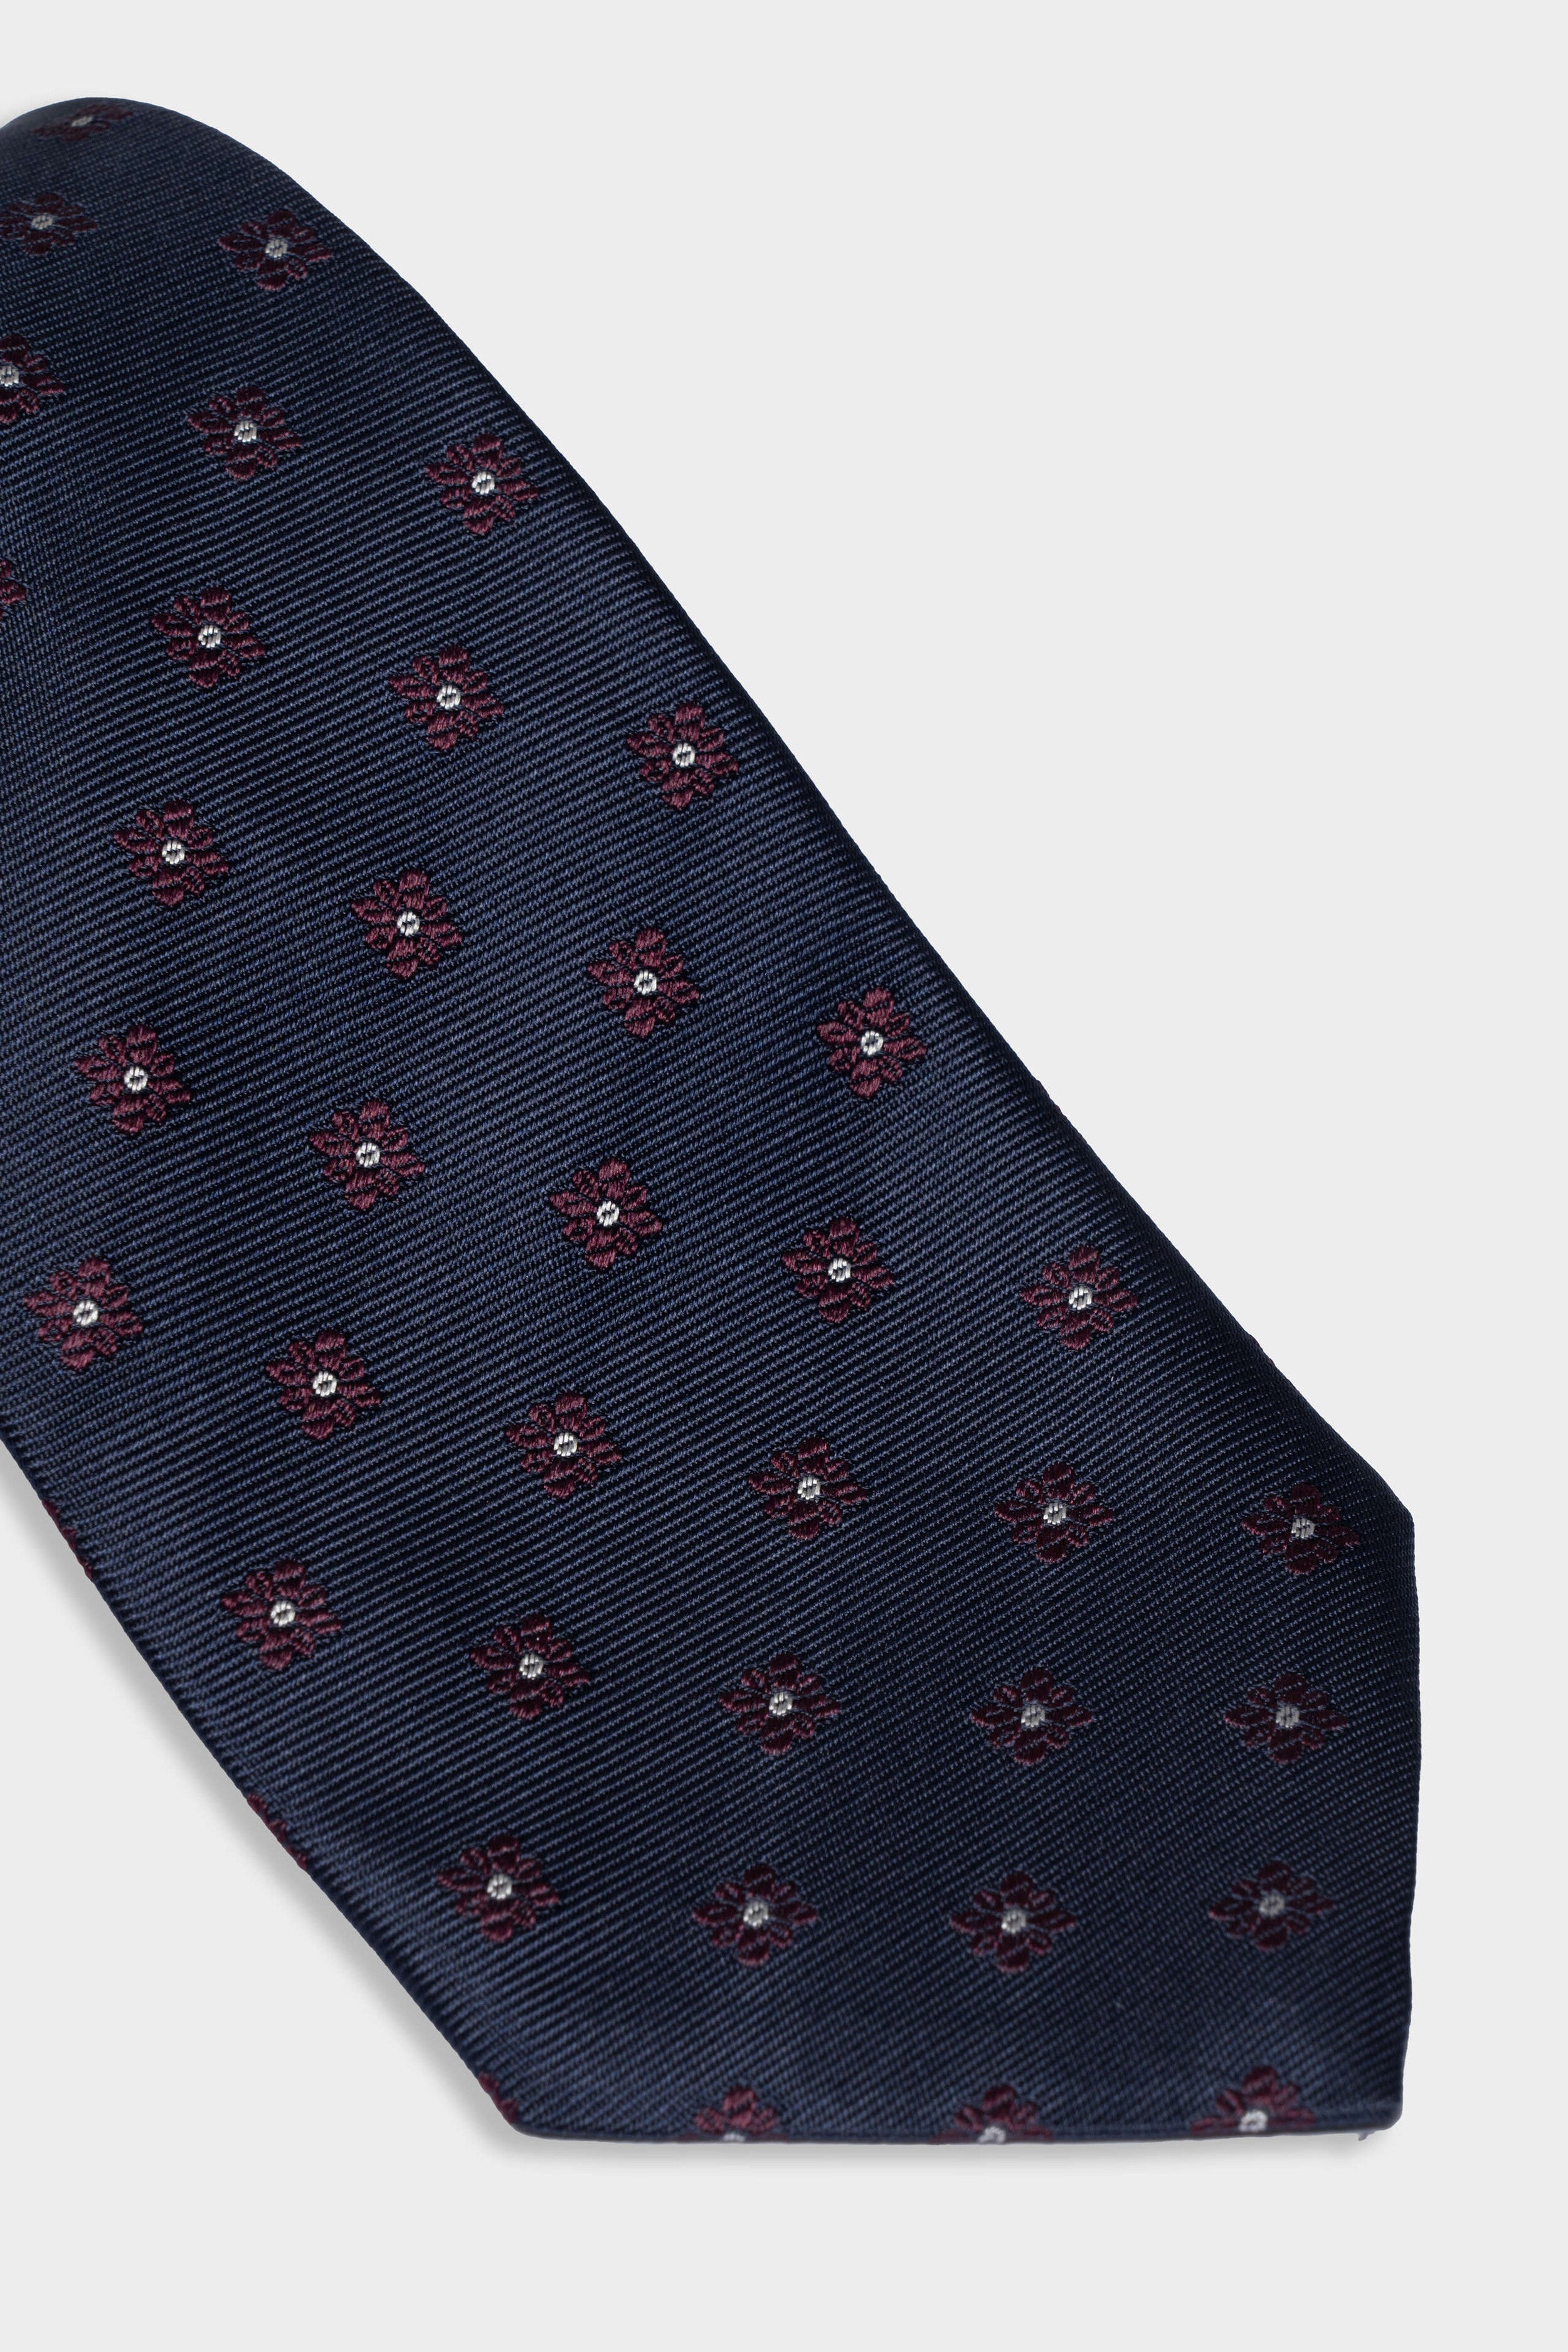 Geometric patterned tie - Blue-Burgundy pattern